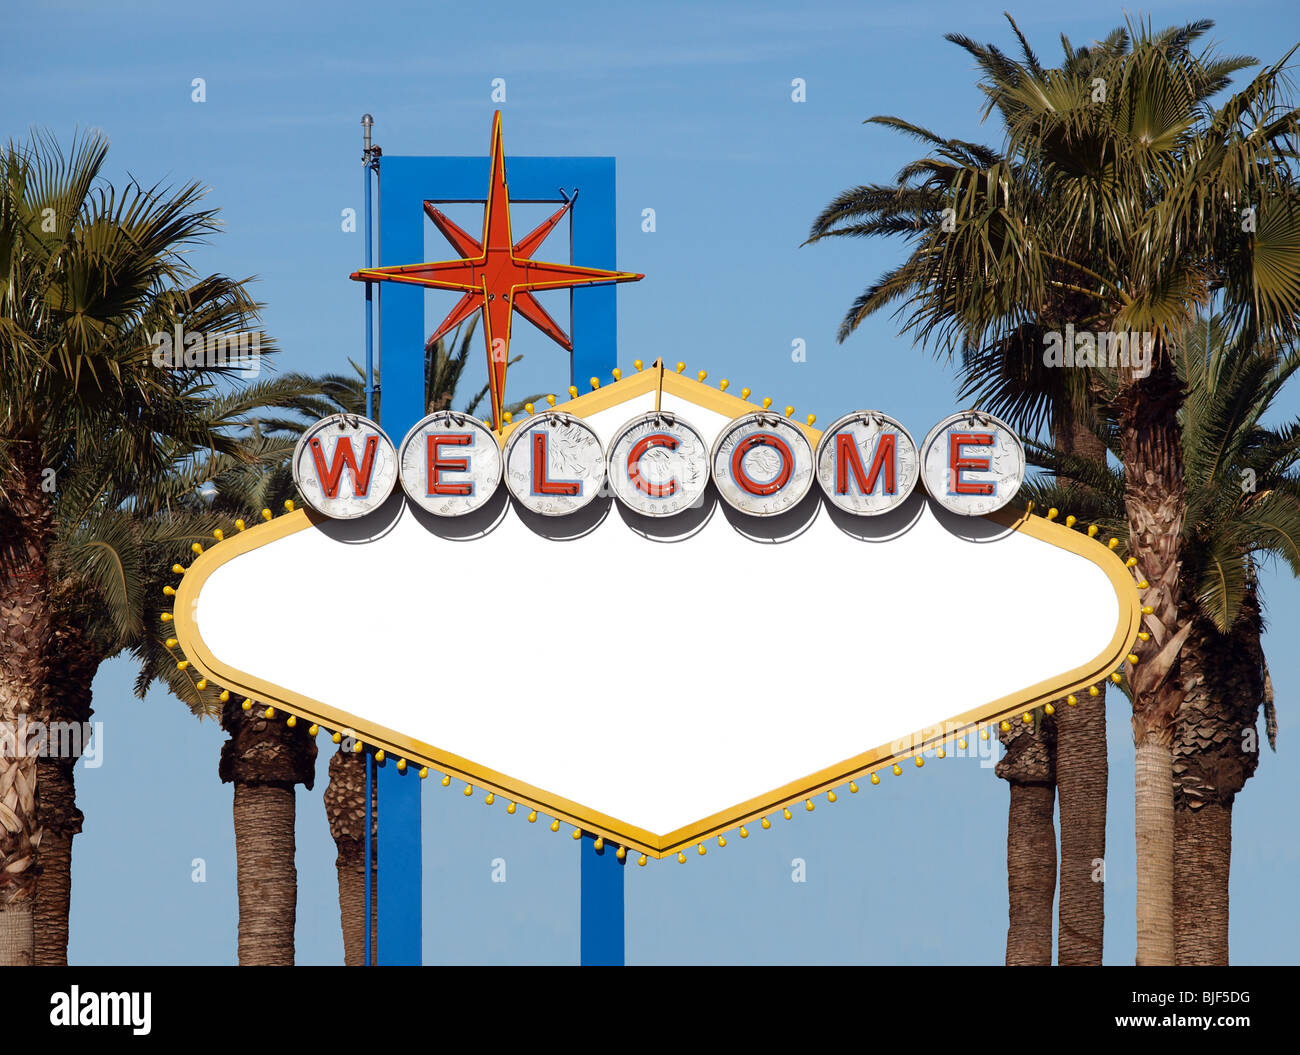 2,074 Drawn Vegas Sign Images, Stock Photos & Vectors